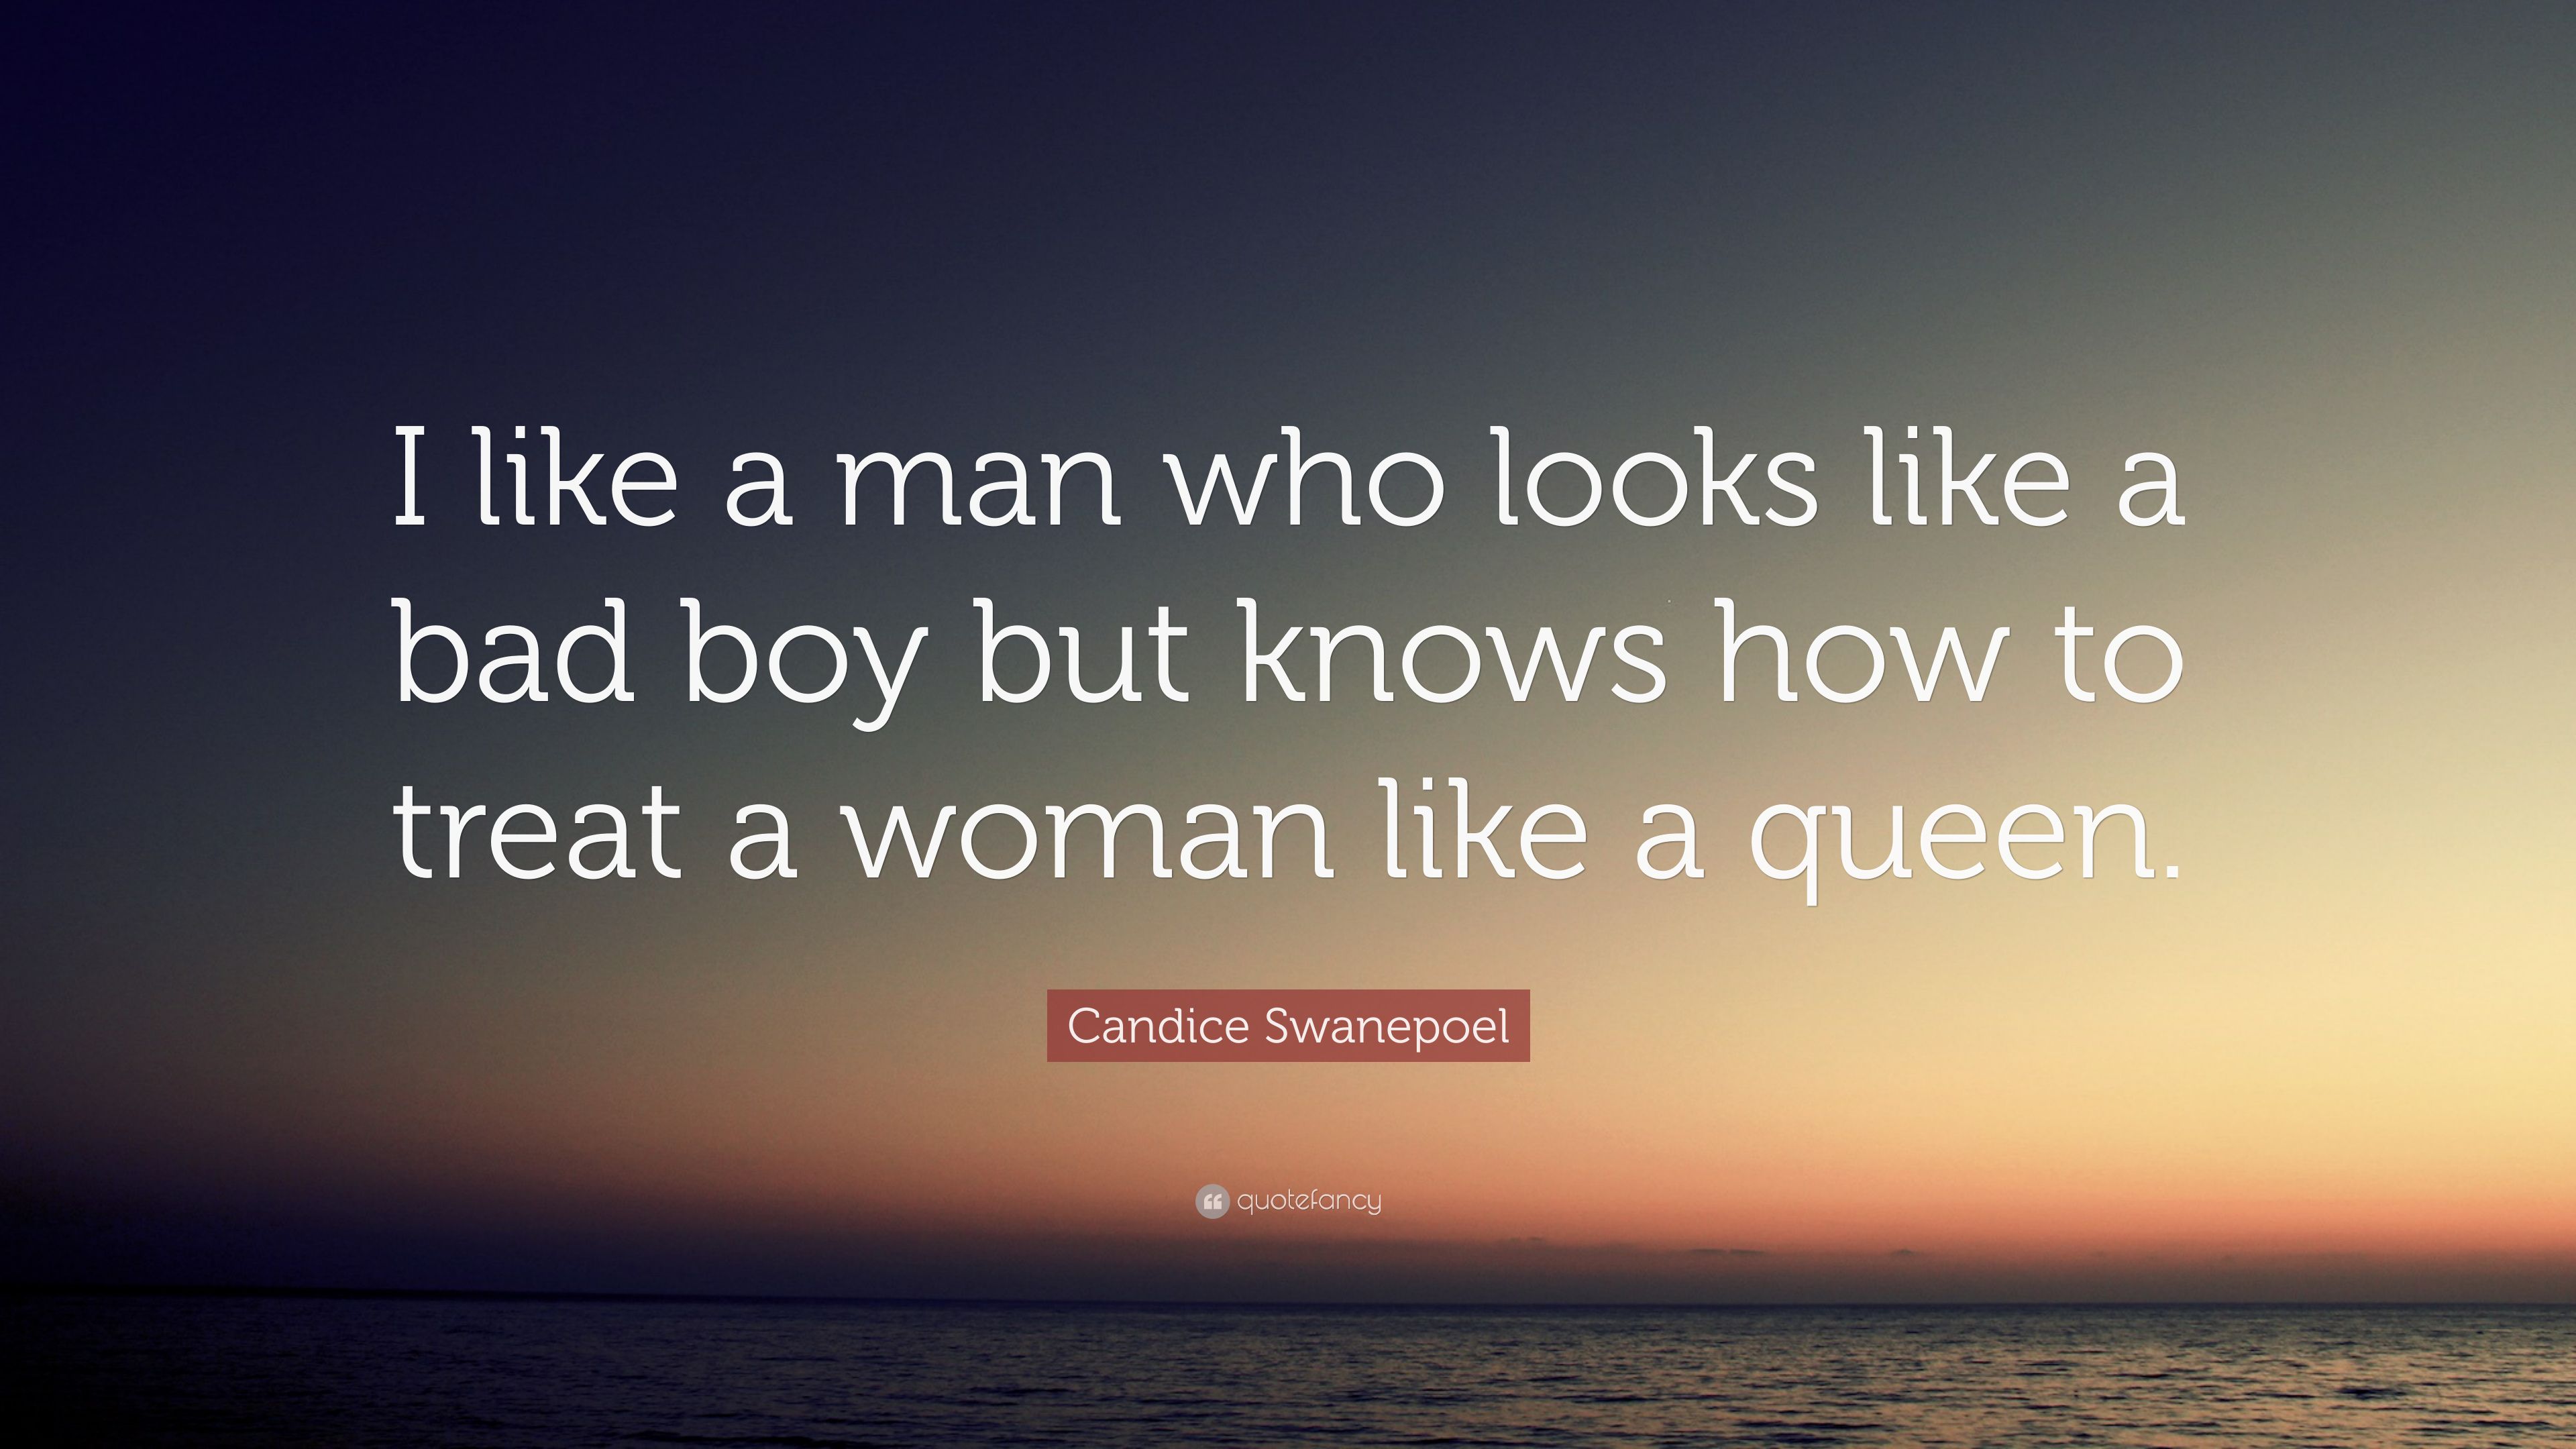 Candice Swanepoel Quote: “I like a man who looks like a bad boy